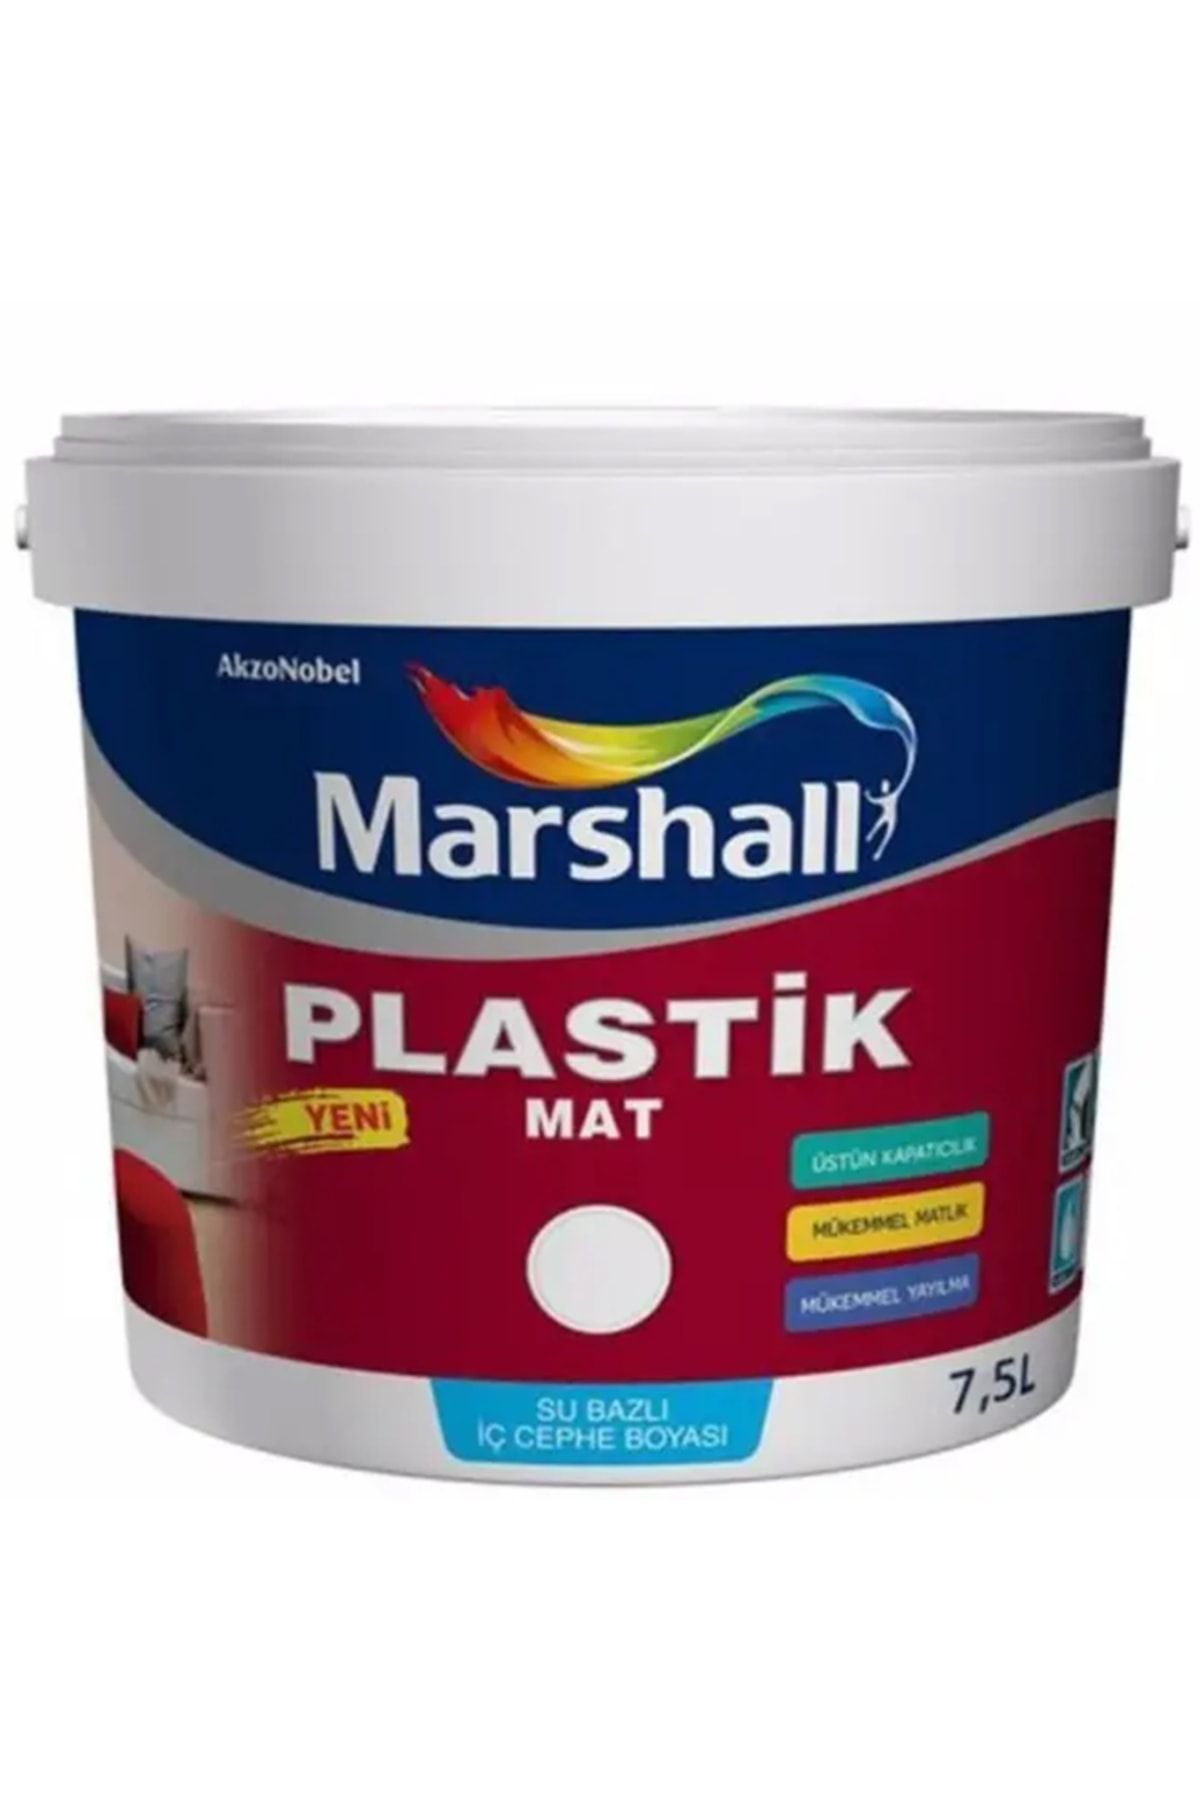 Marshall Plastik Mat Silinebilir Iç Cephe Boyası Kara Kalem 7,5 Lt (10 Kg)